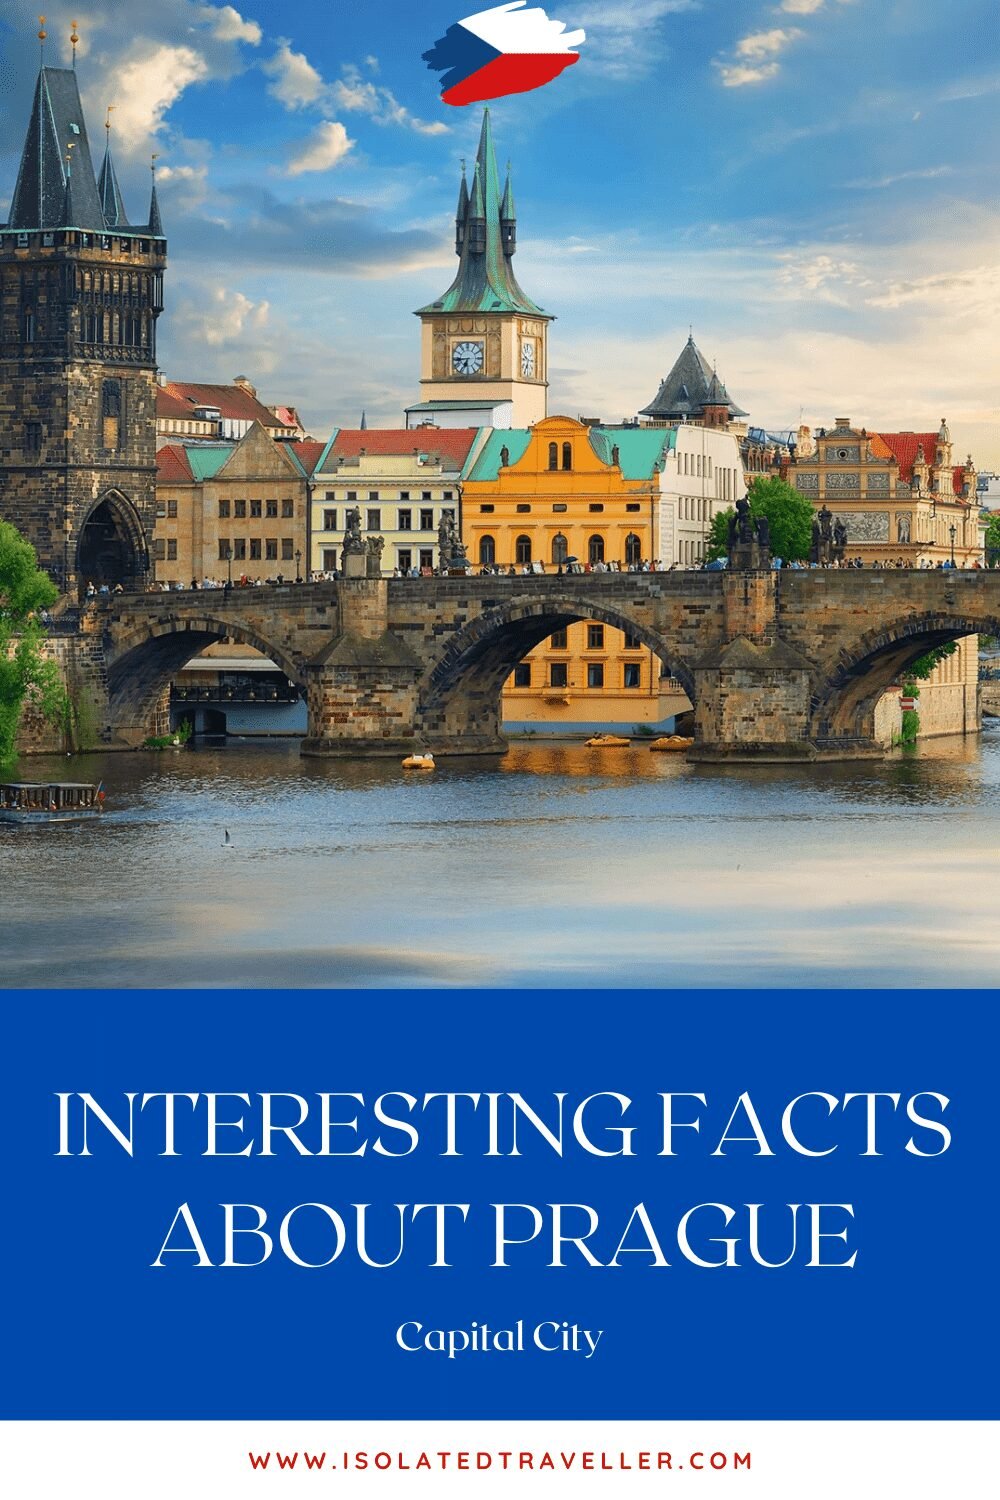 Facts About Prague